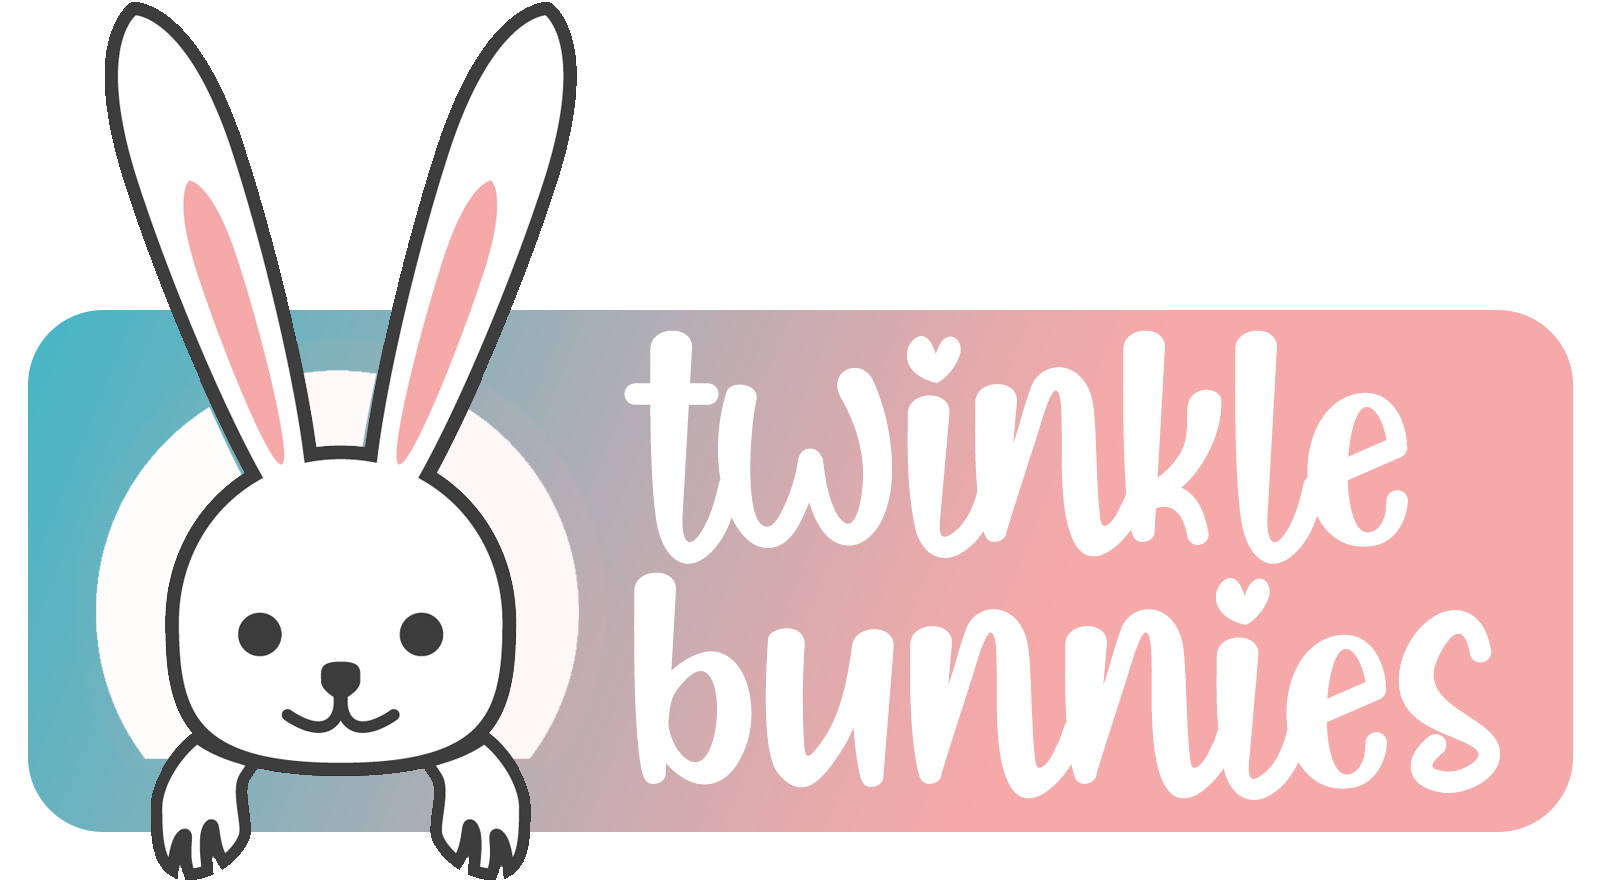 Activity – Twinkle Bunnies